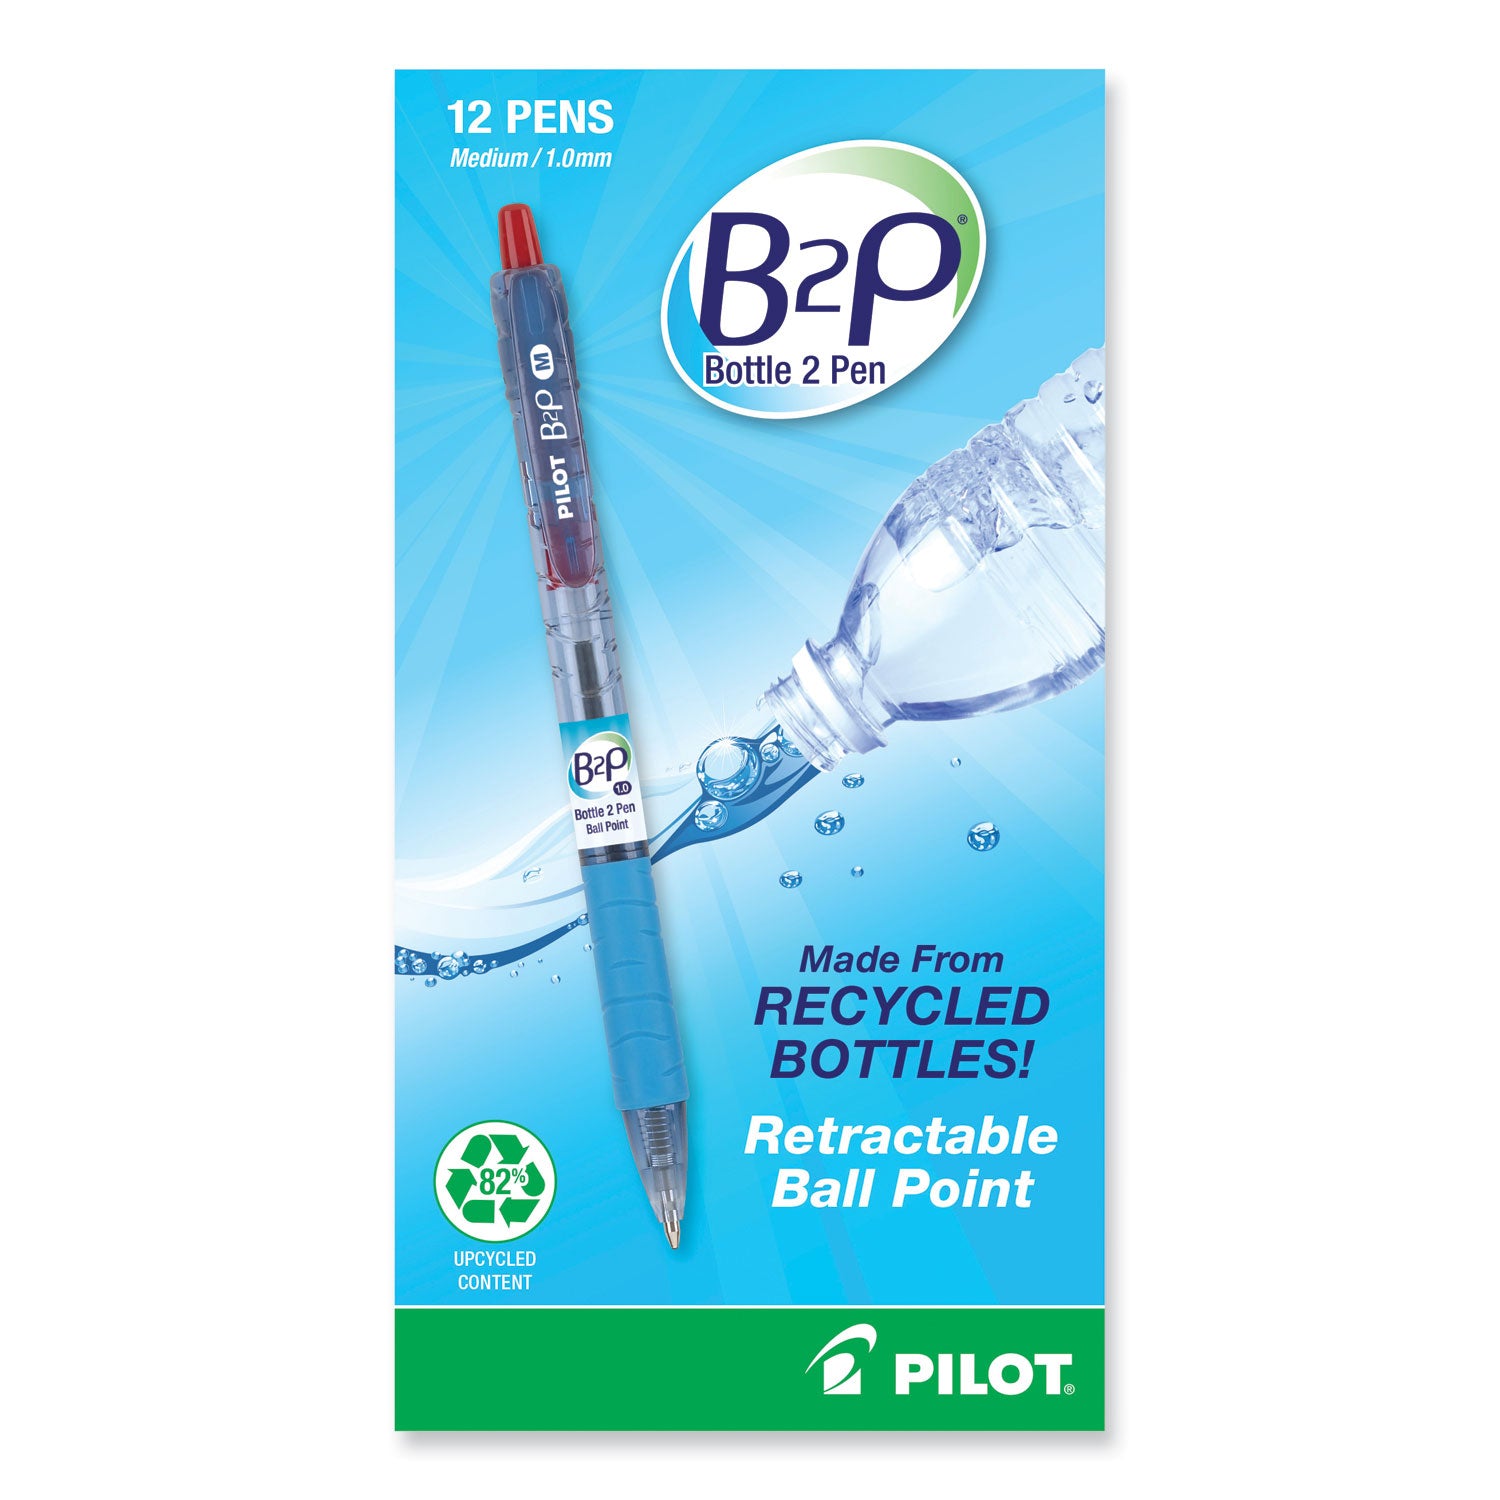 B2P Bottle-2-Pen Recycled Ballpoint Pen, Retractable, Medium 1 mm, Red Ink, Translucent Blue Barrel, Dozen - 